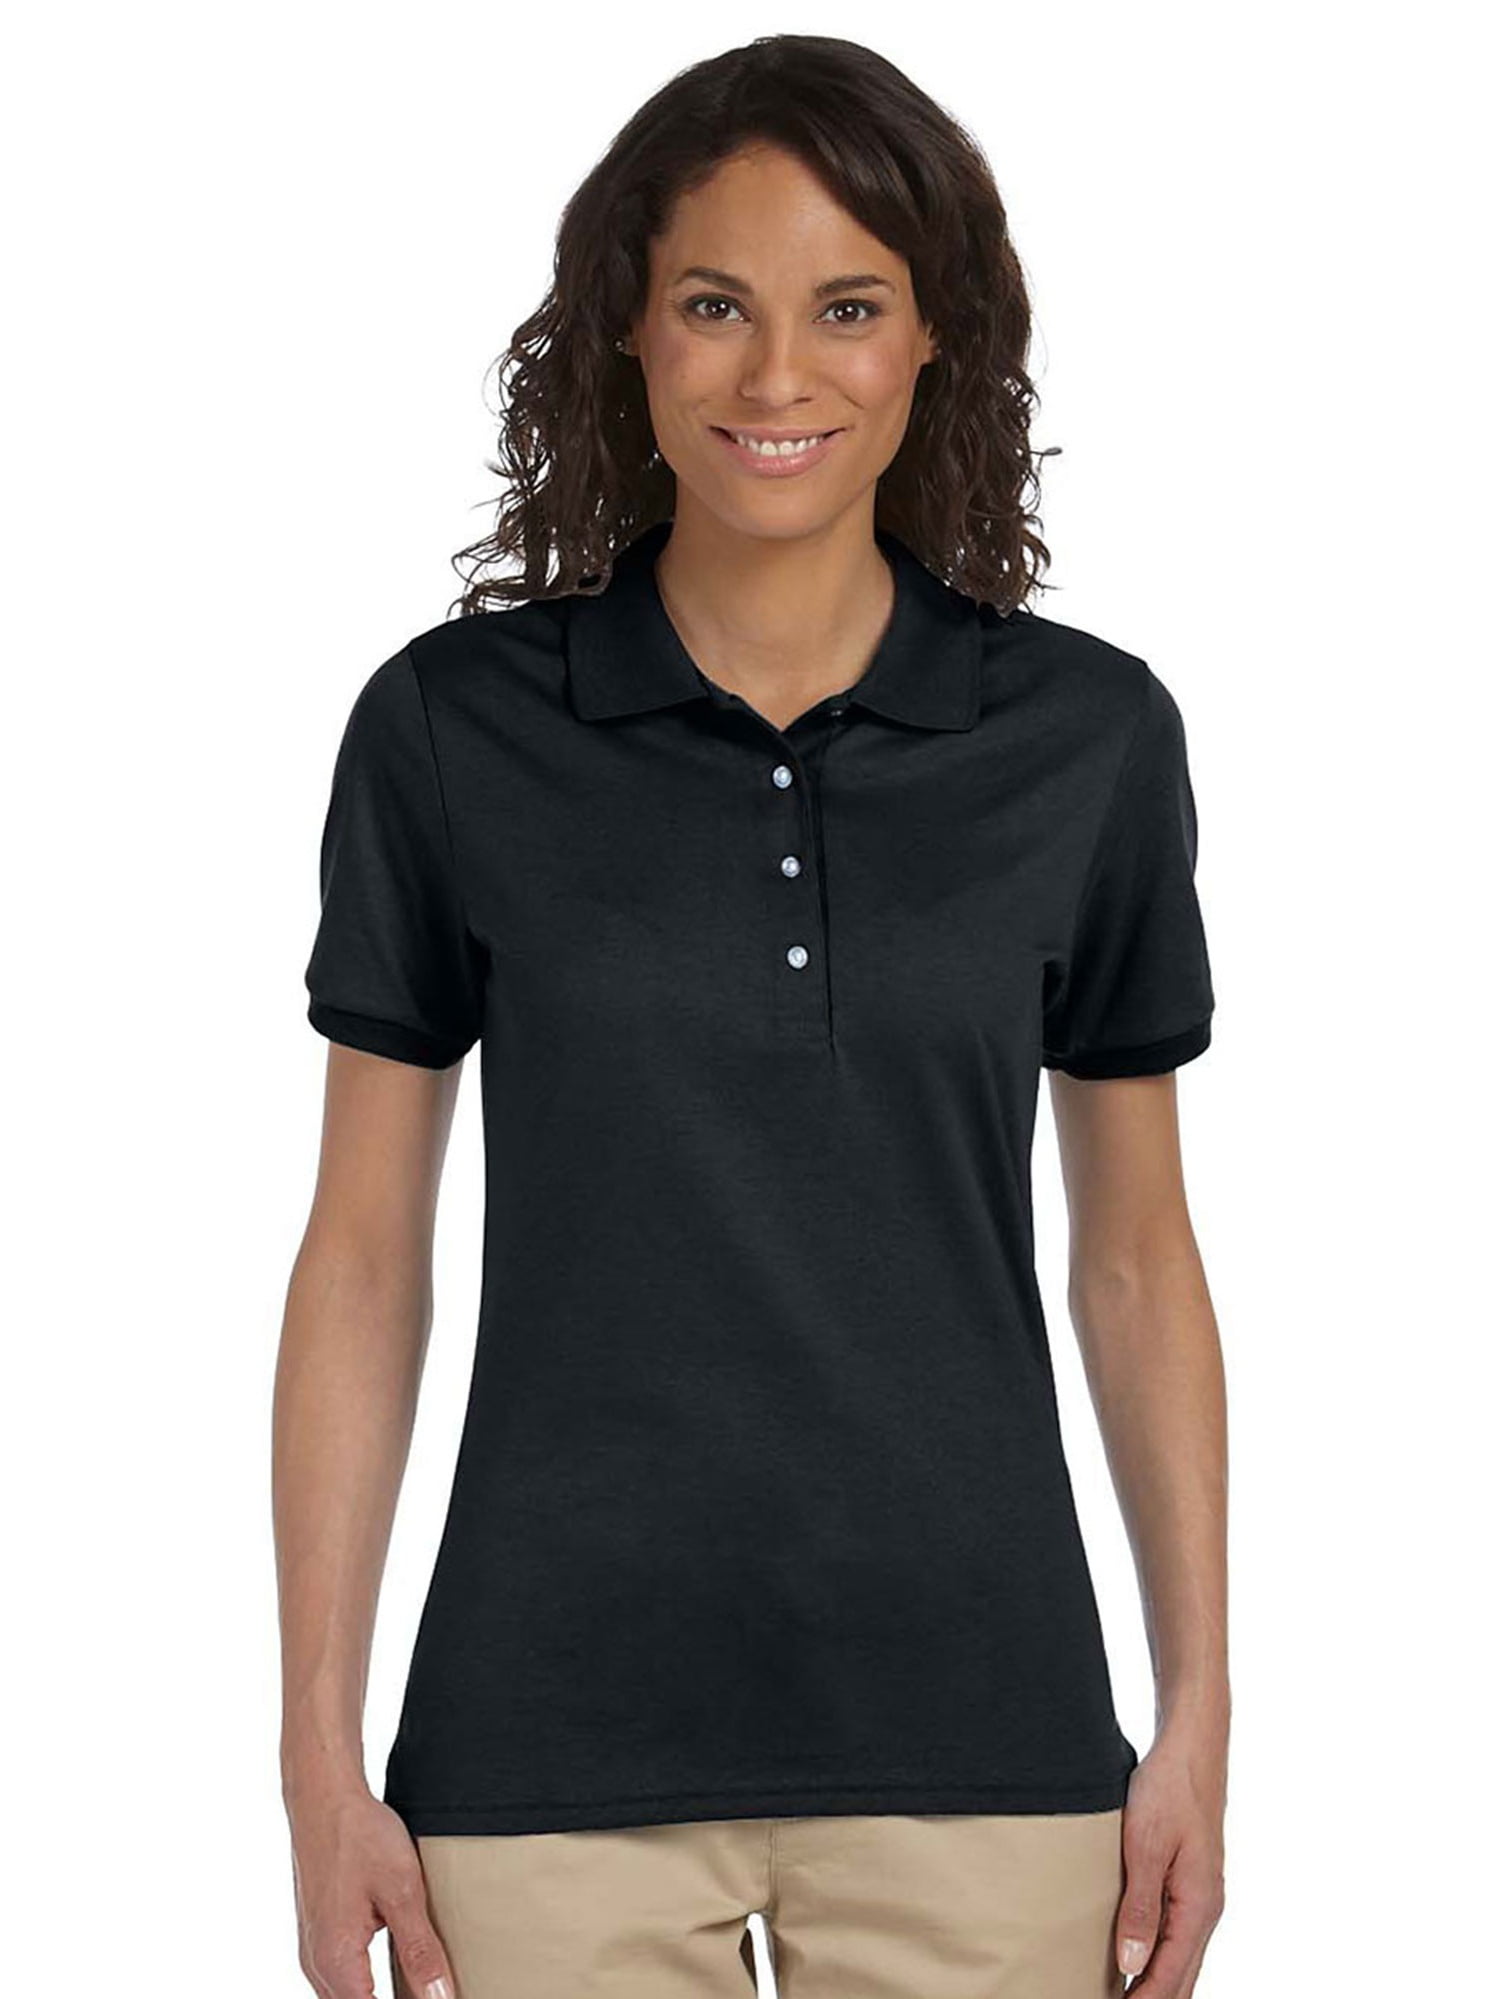 jerzees women's polo shirts